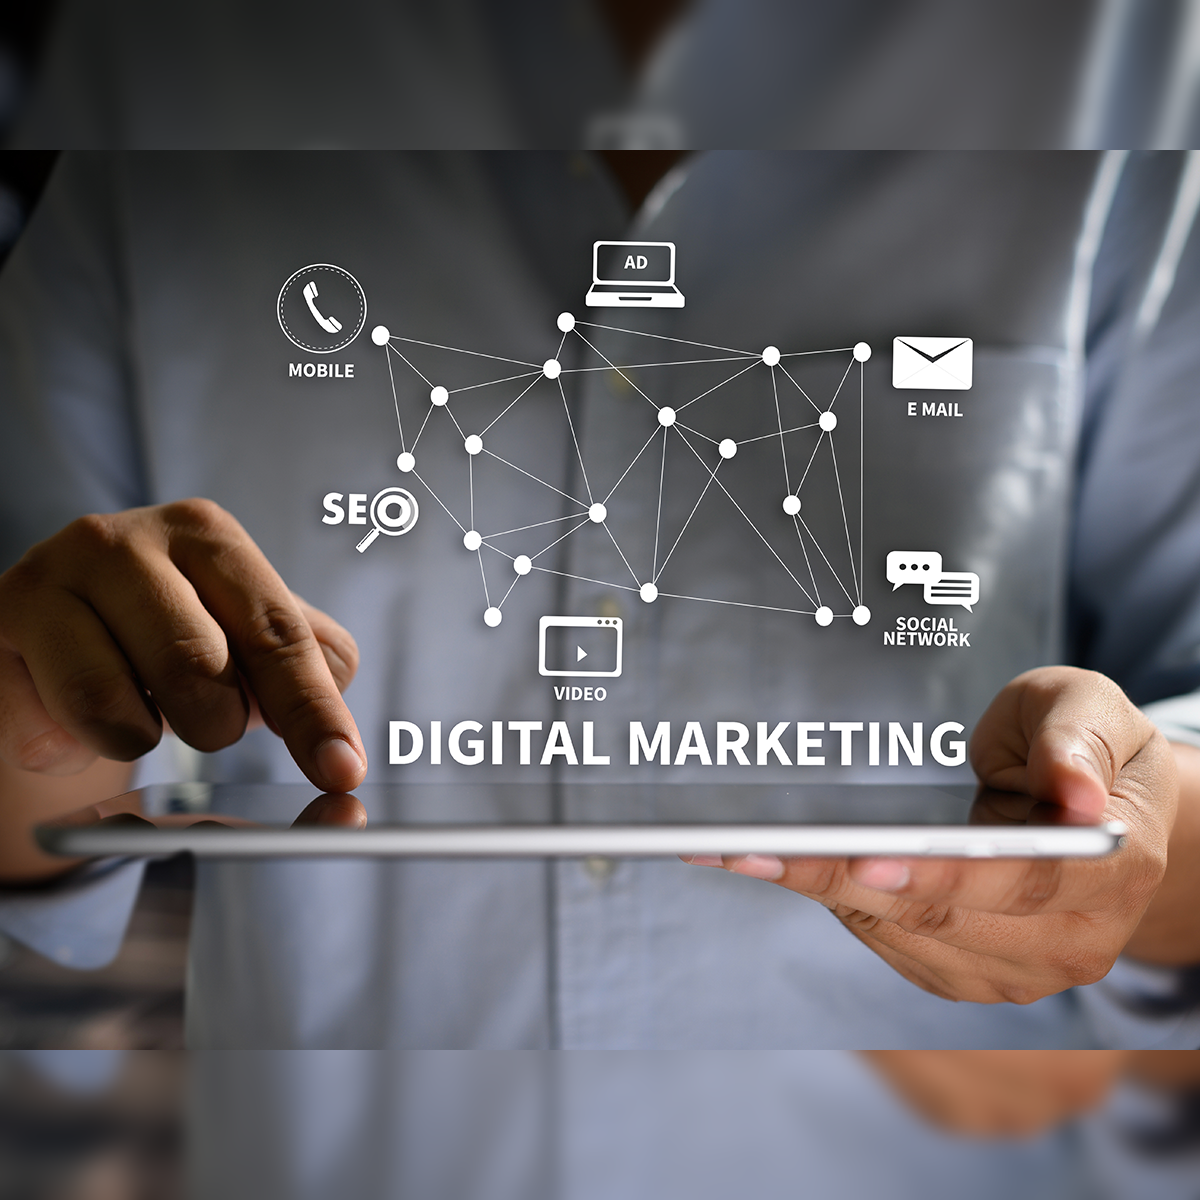 Traditional Marketing: Digital Marketing vs Traditional Marketing : What's The Difference? - The Economic Times